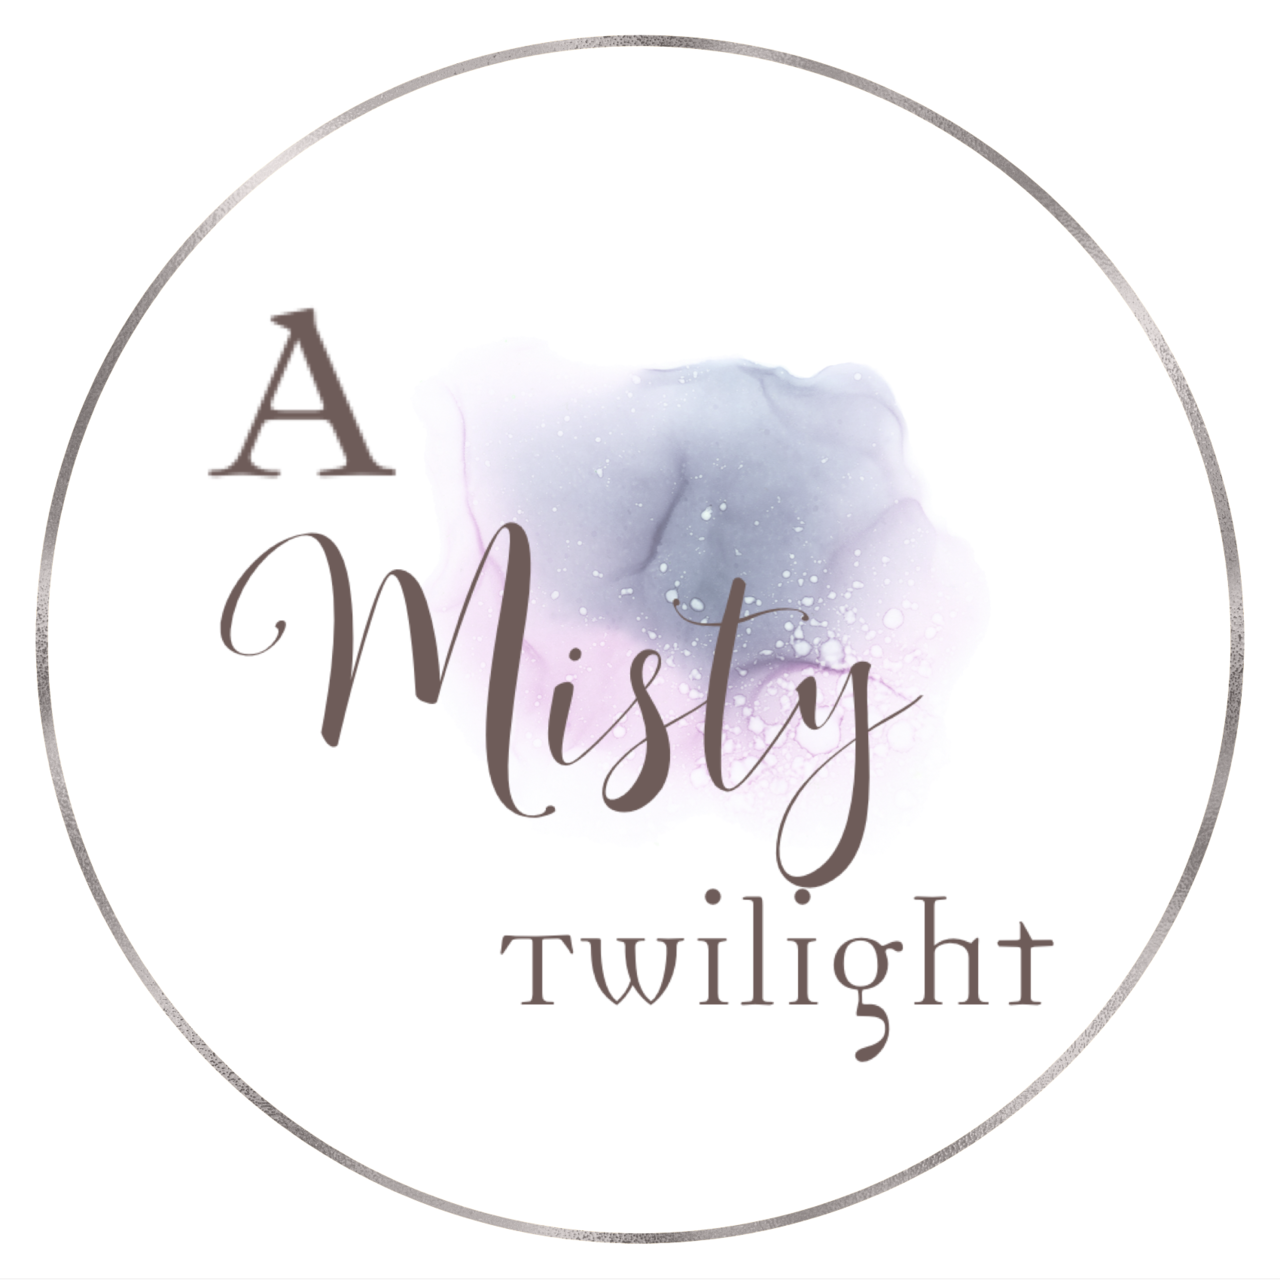 Artwork for A Misty Twilight